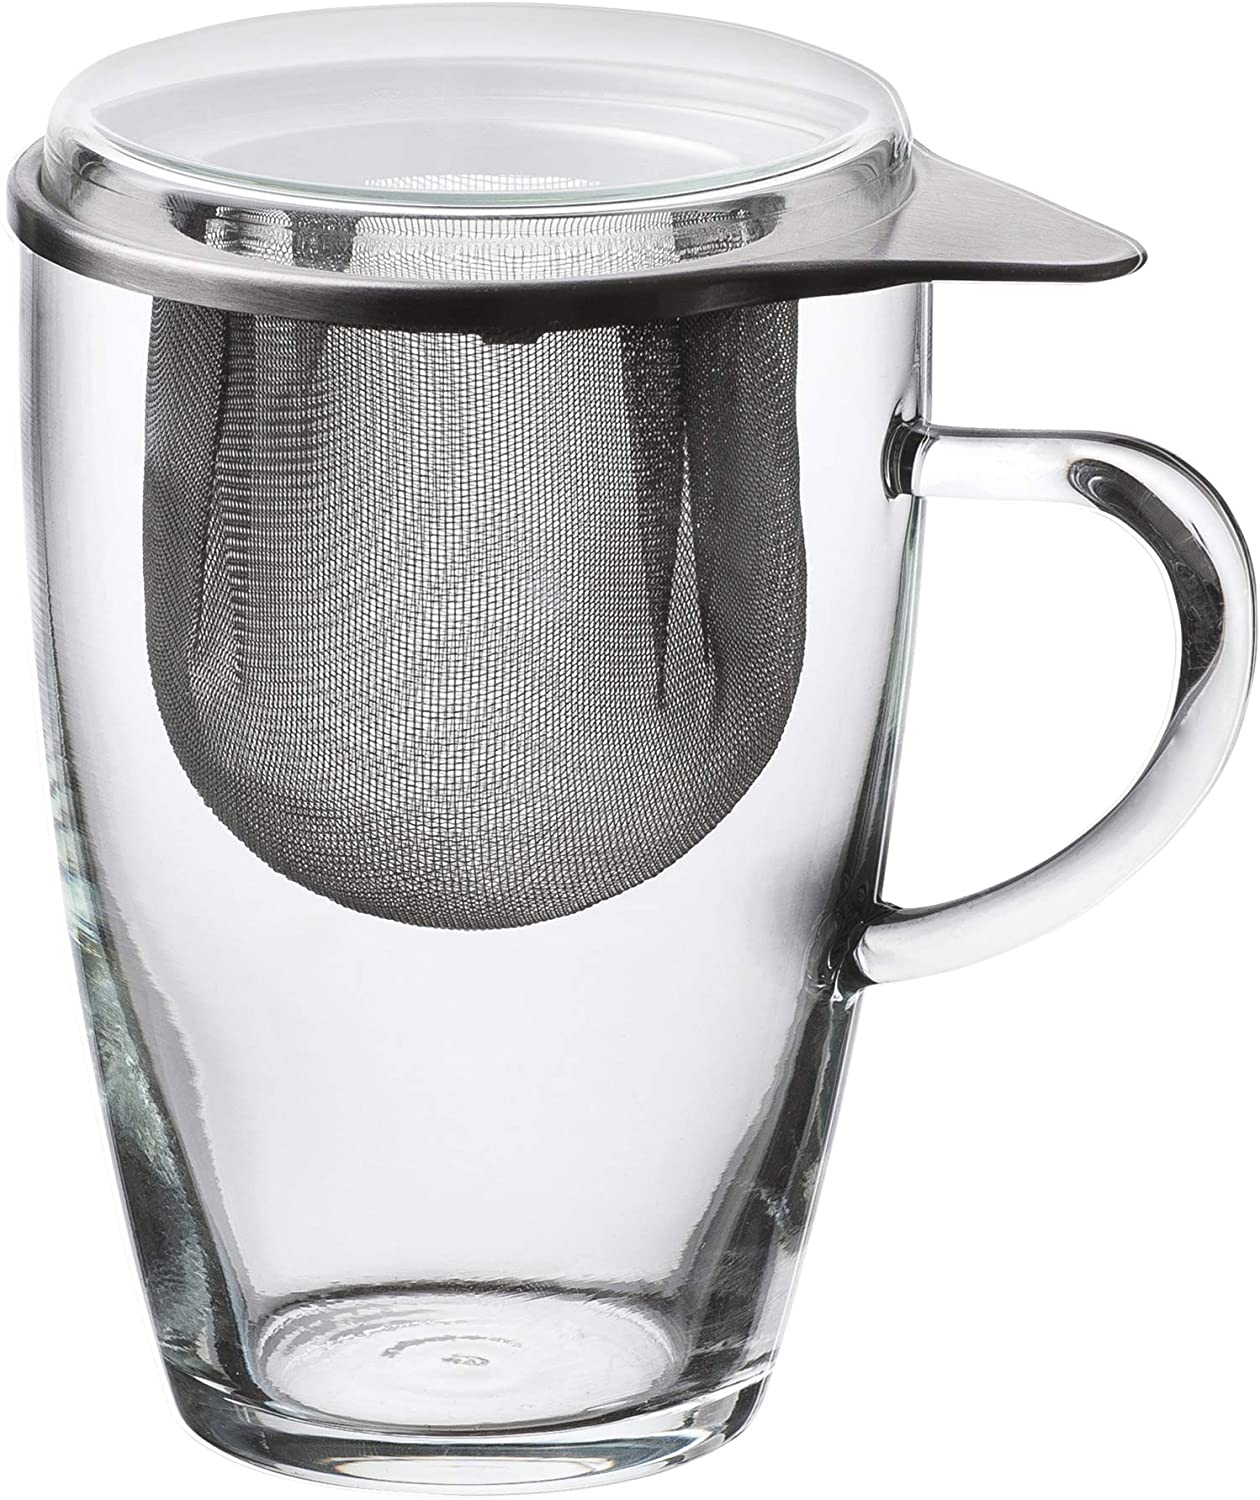 Bohemia Cristal SIMAX 093 006 Tea Glass 350 ml Heat Resistant Borosilicate Glass with Metal Strainer and Lid